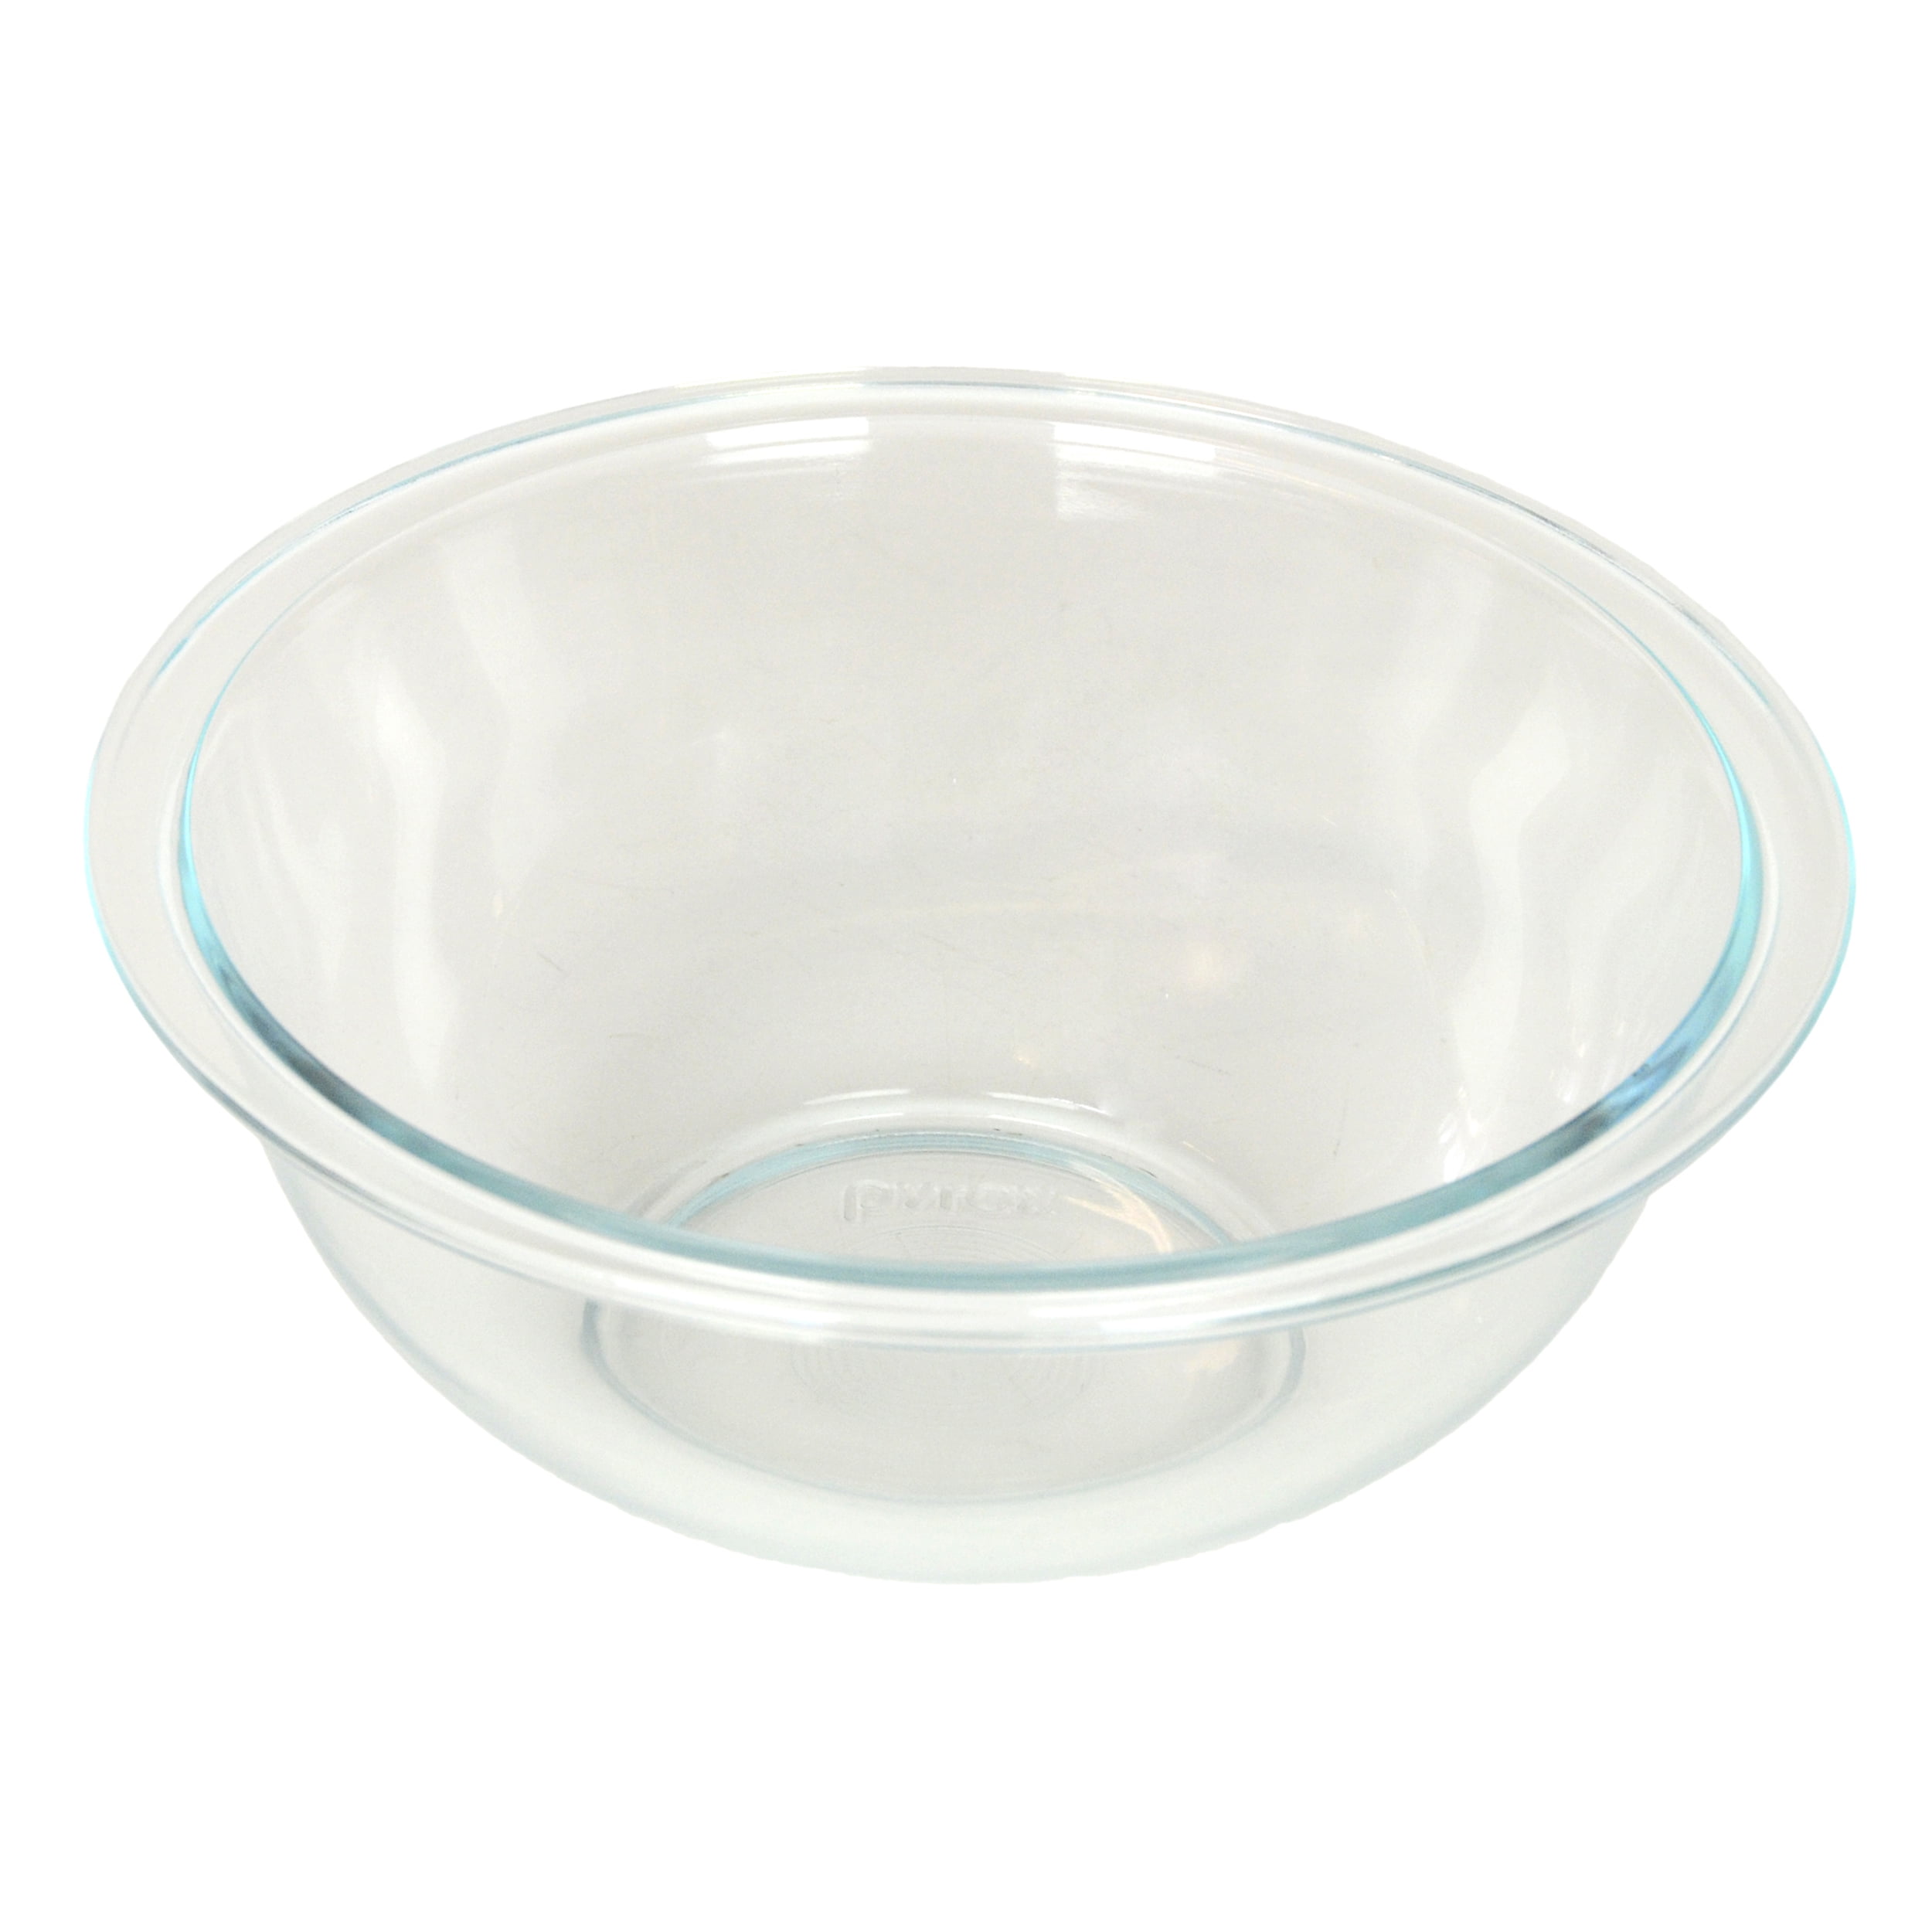 Pyrex 024 2 Liter Clear Glass Mixing Bowl